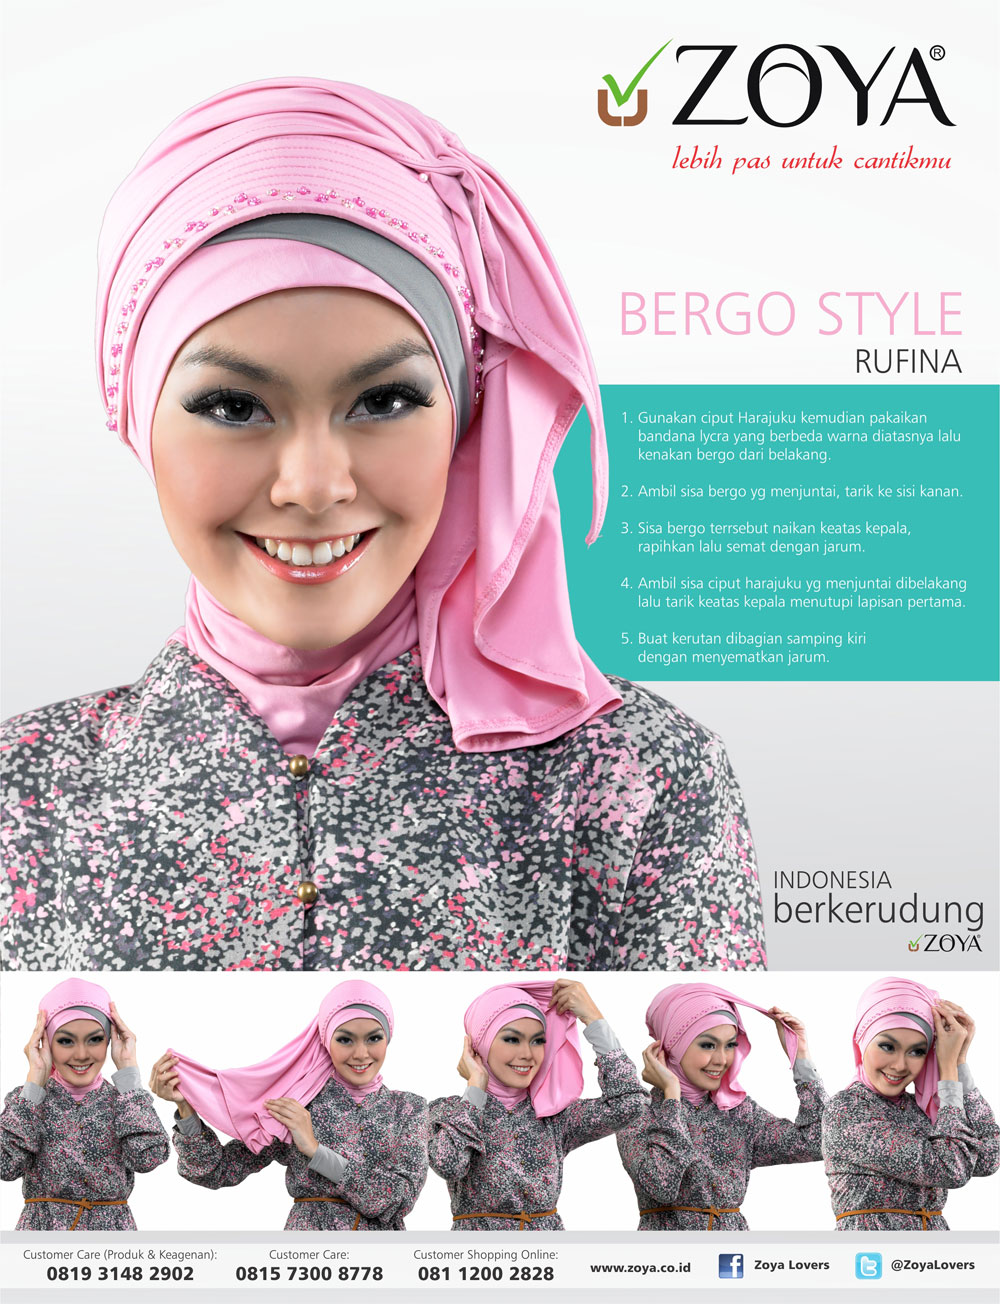 30 Gambar Menarik Tutorial Hijab Indonesia Pesta By Zoya 2017 Tutorial